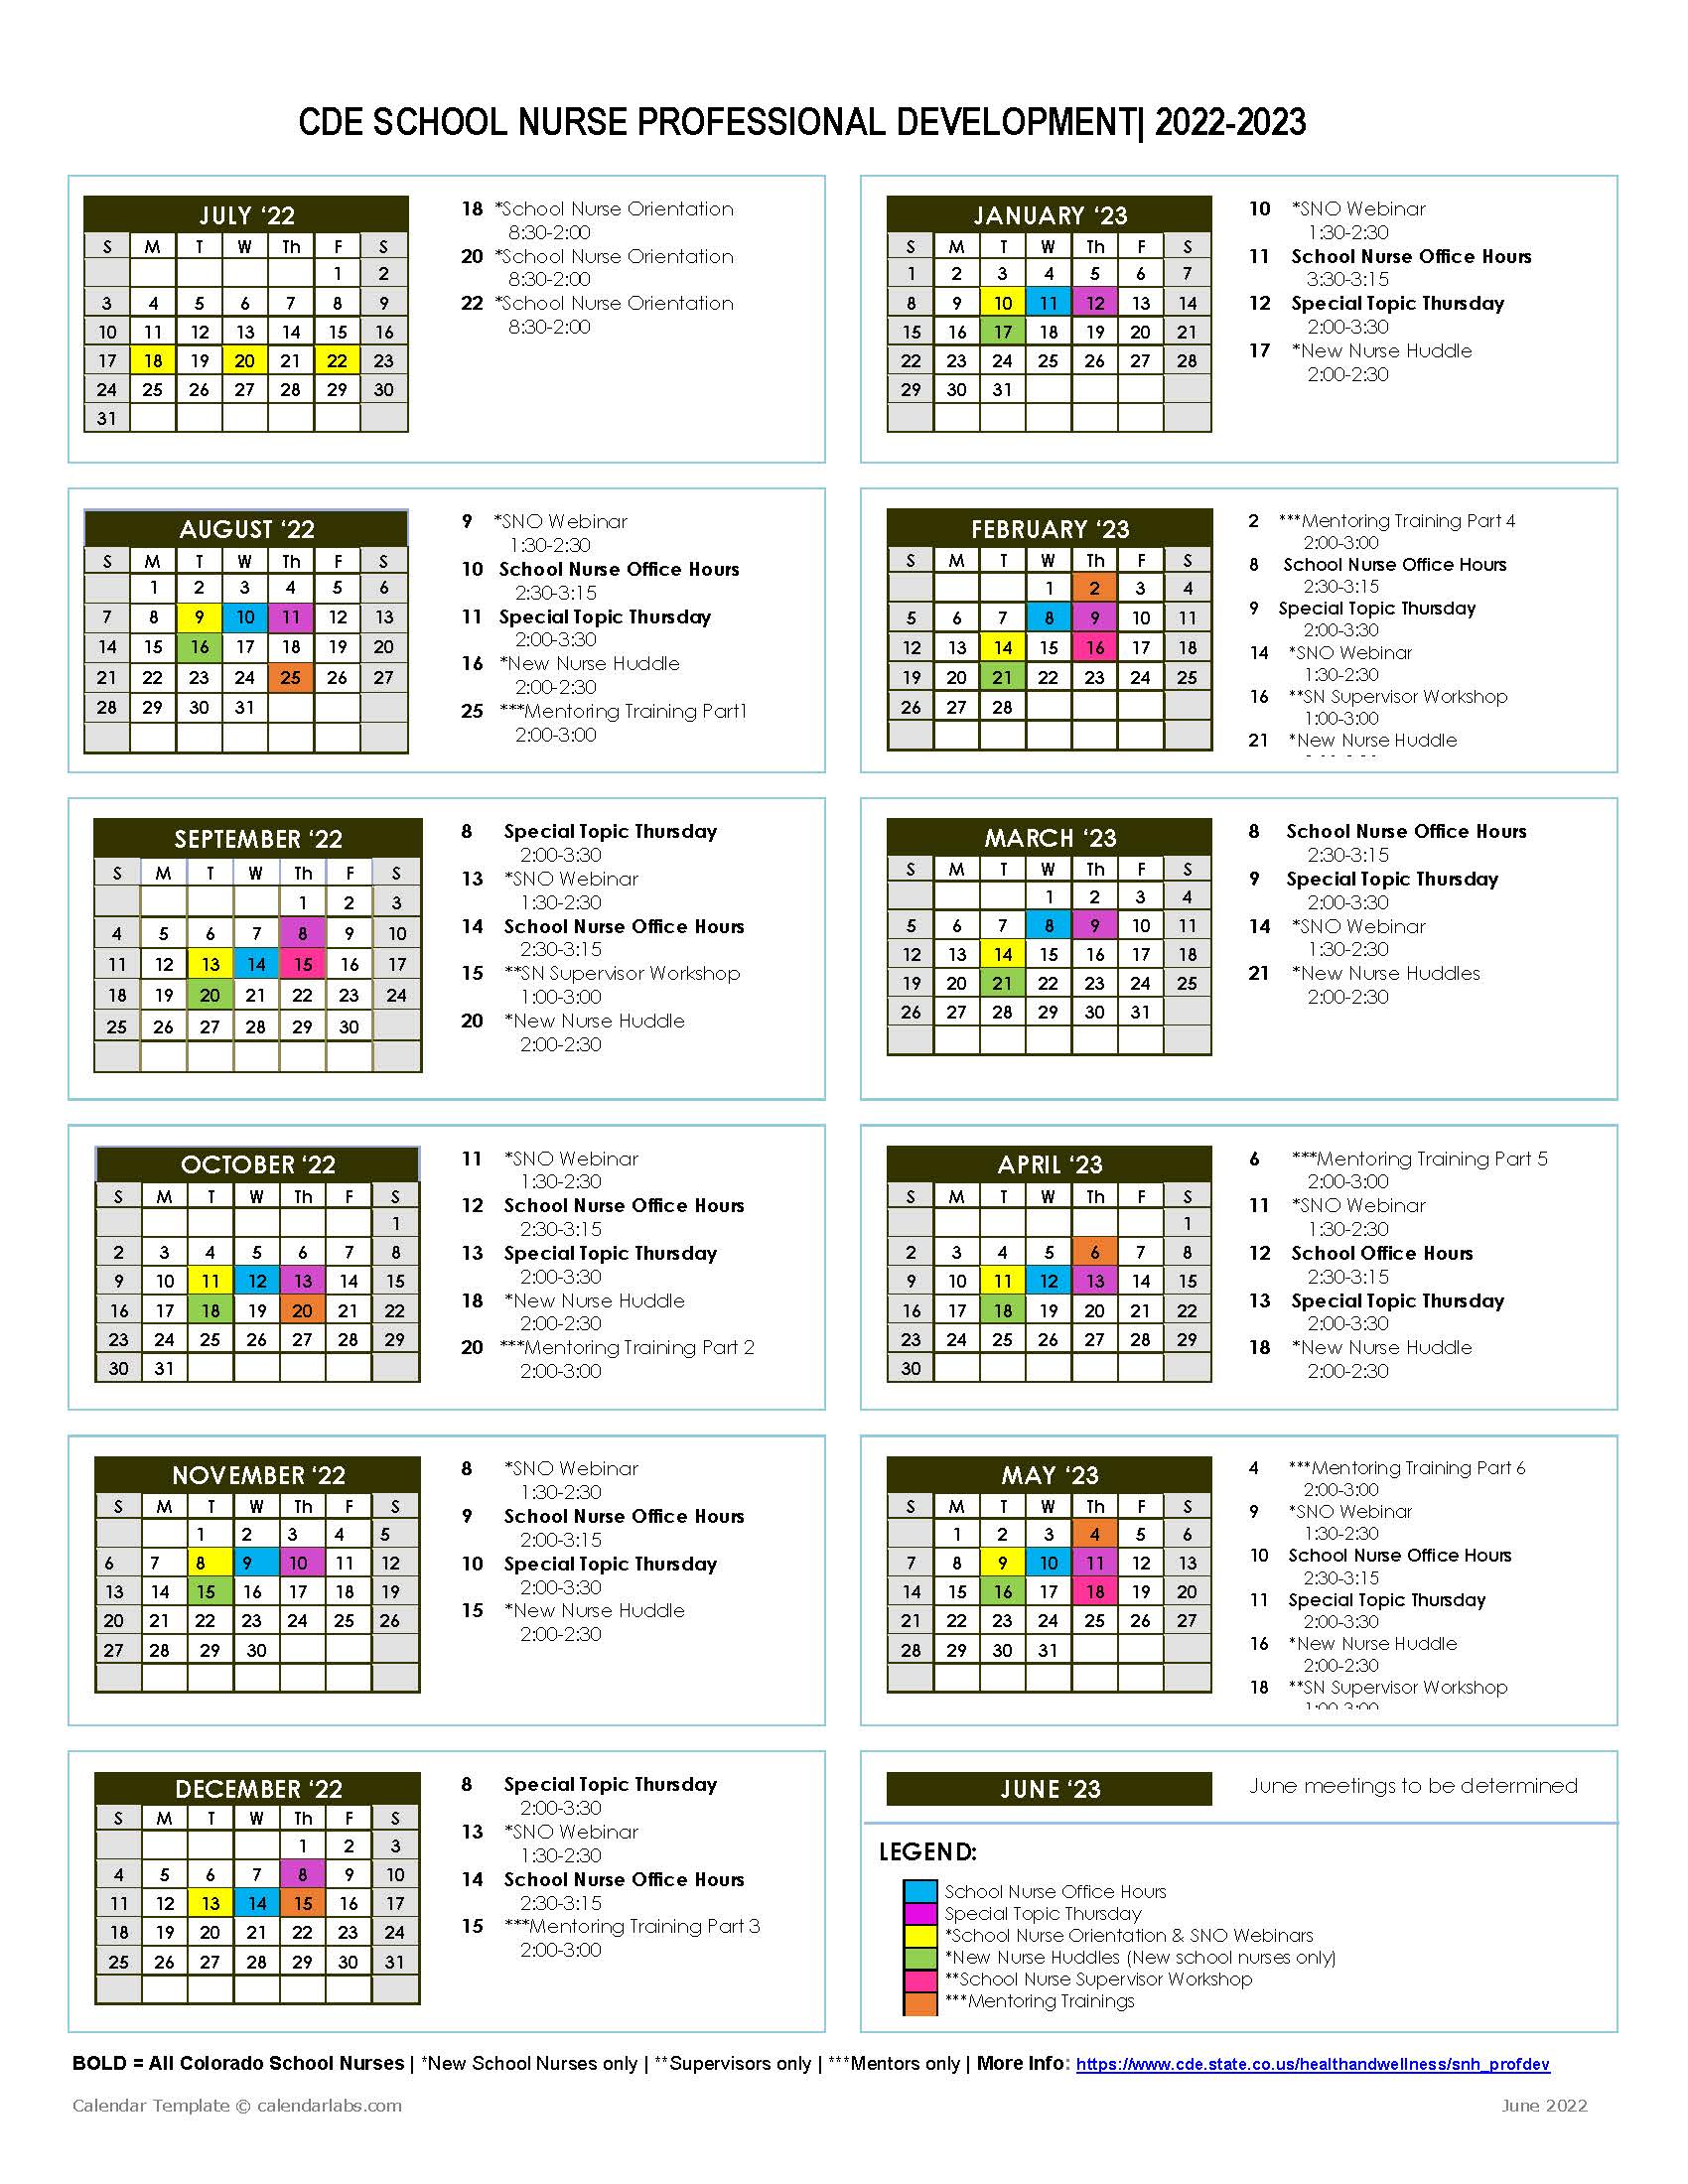 School Nurse Professional Development Calendar